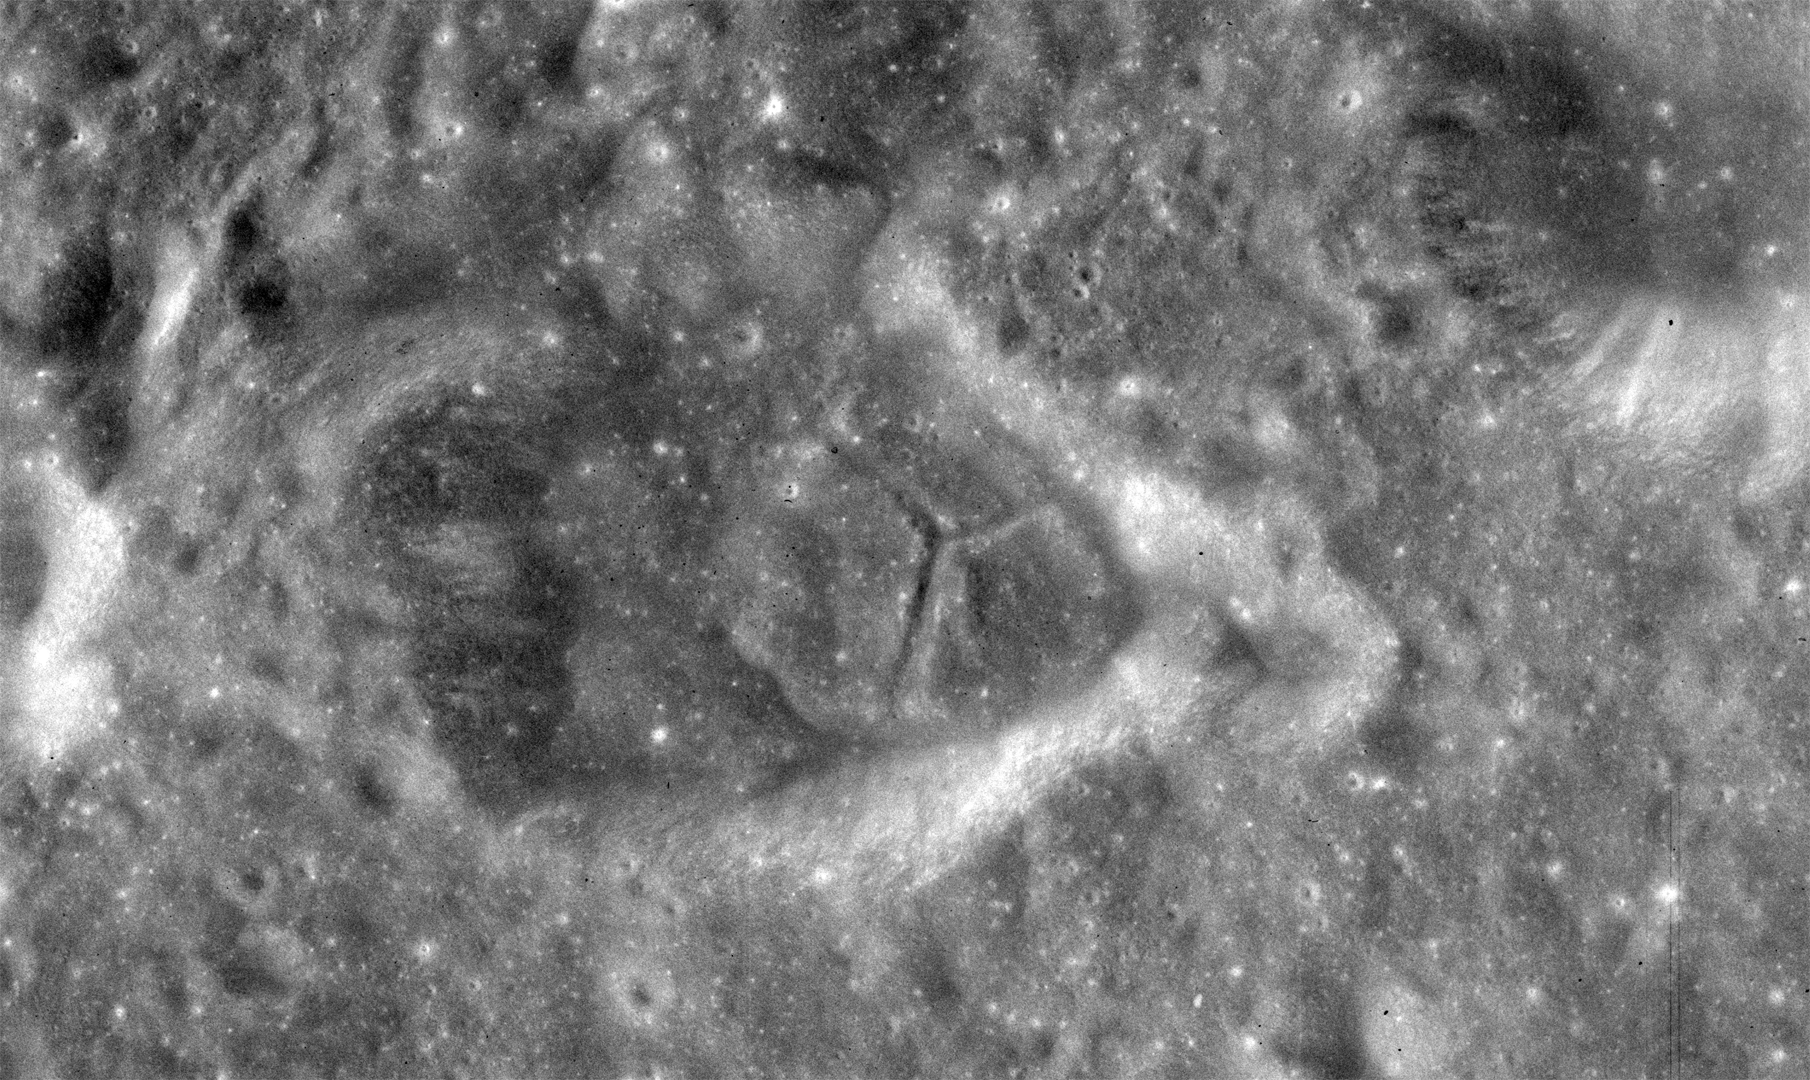 Apollo Metric image (frame ID AS15-M-2103)